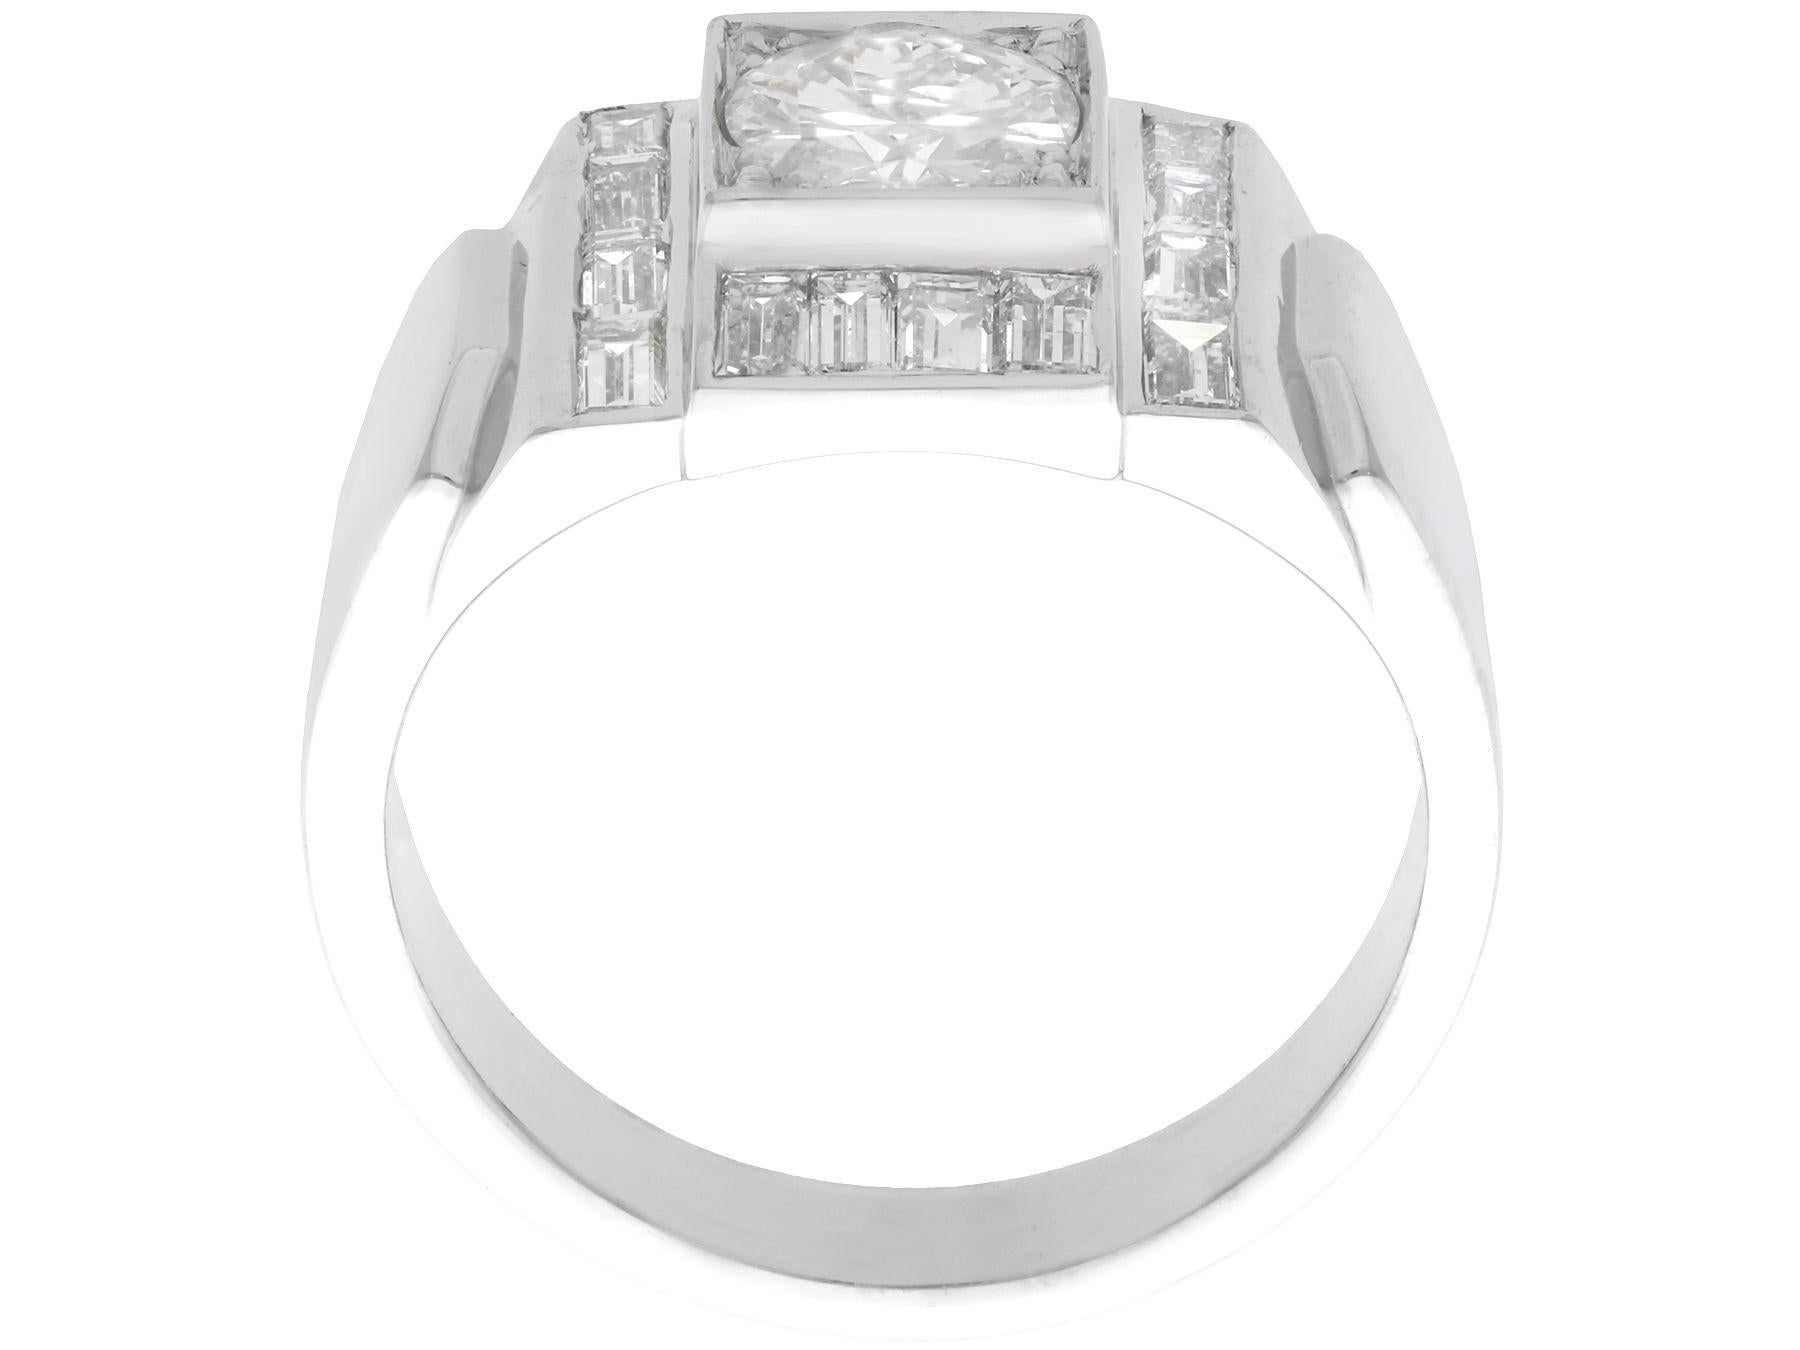 Women's or Men's Art Deco 1940s French 1.60 Carat Diamond Cocktail Ring